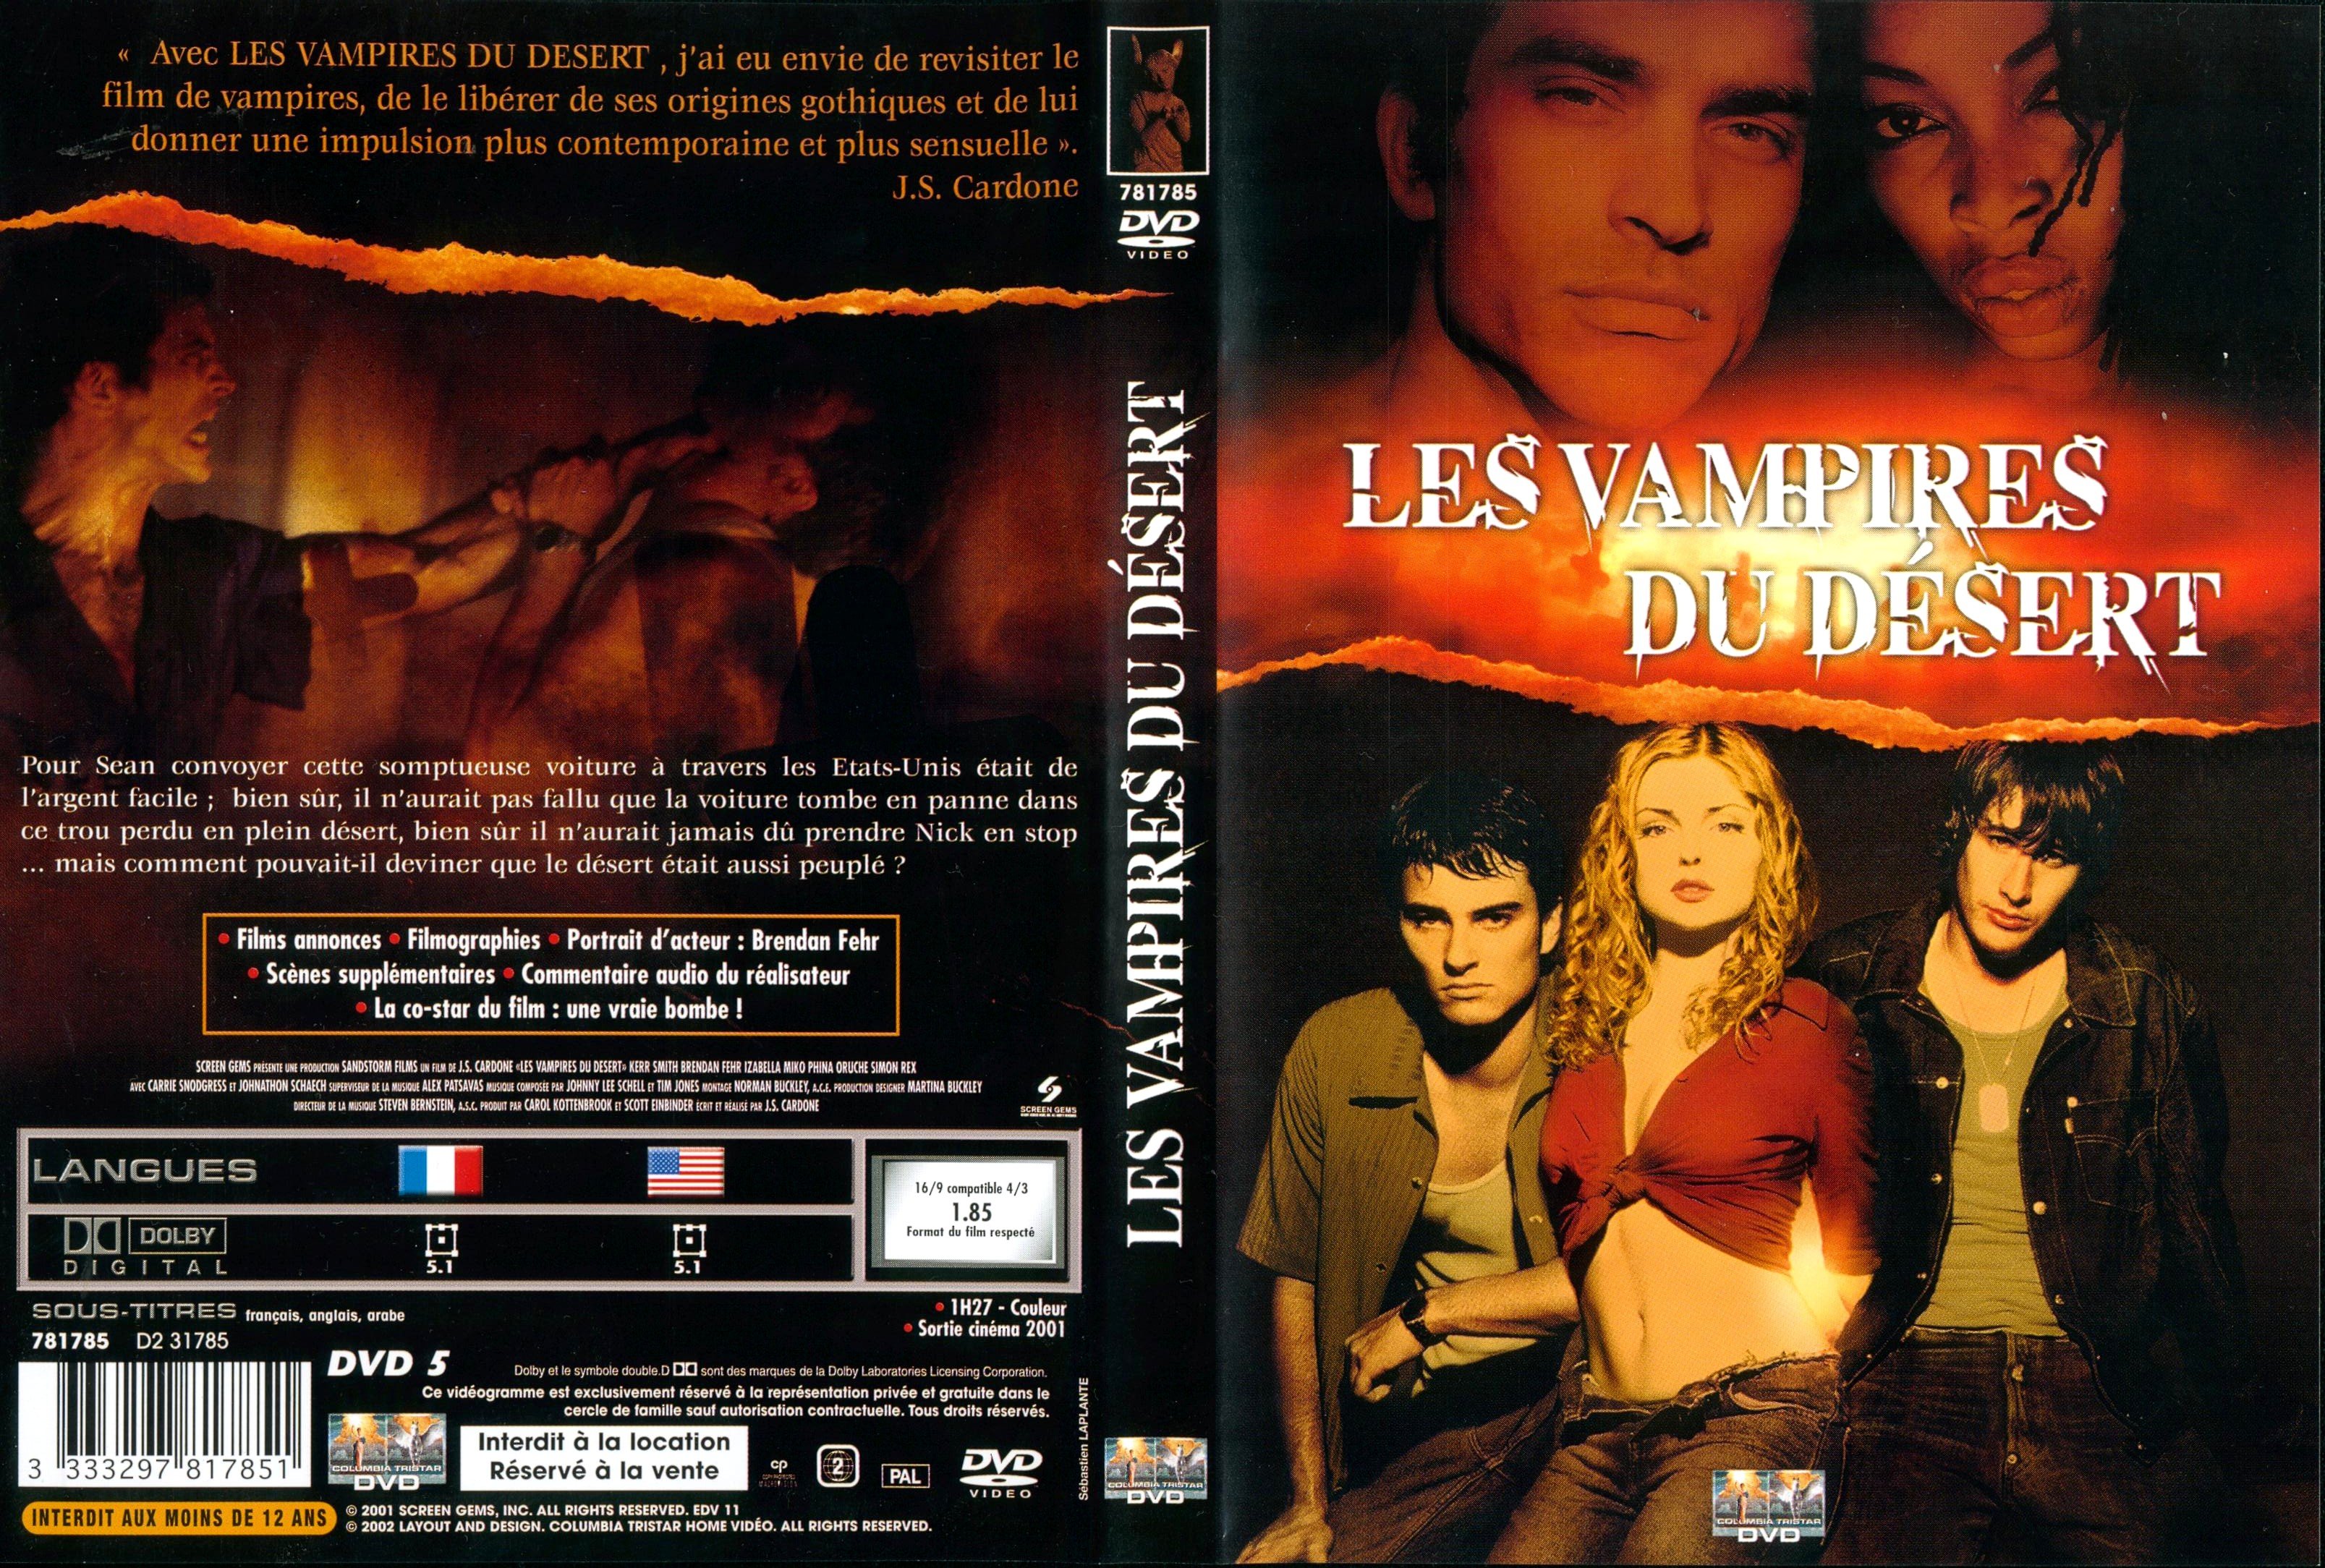 Jaquette DVD Les vampires du dsert